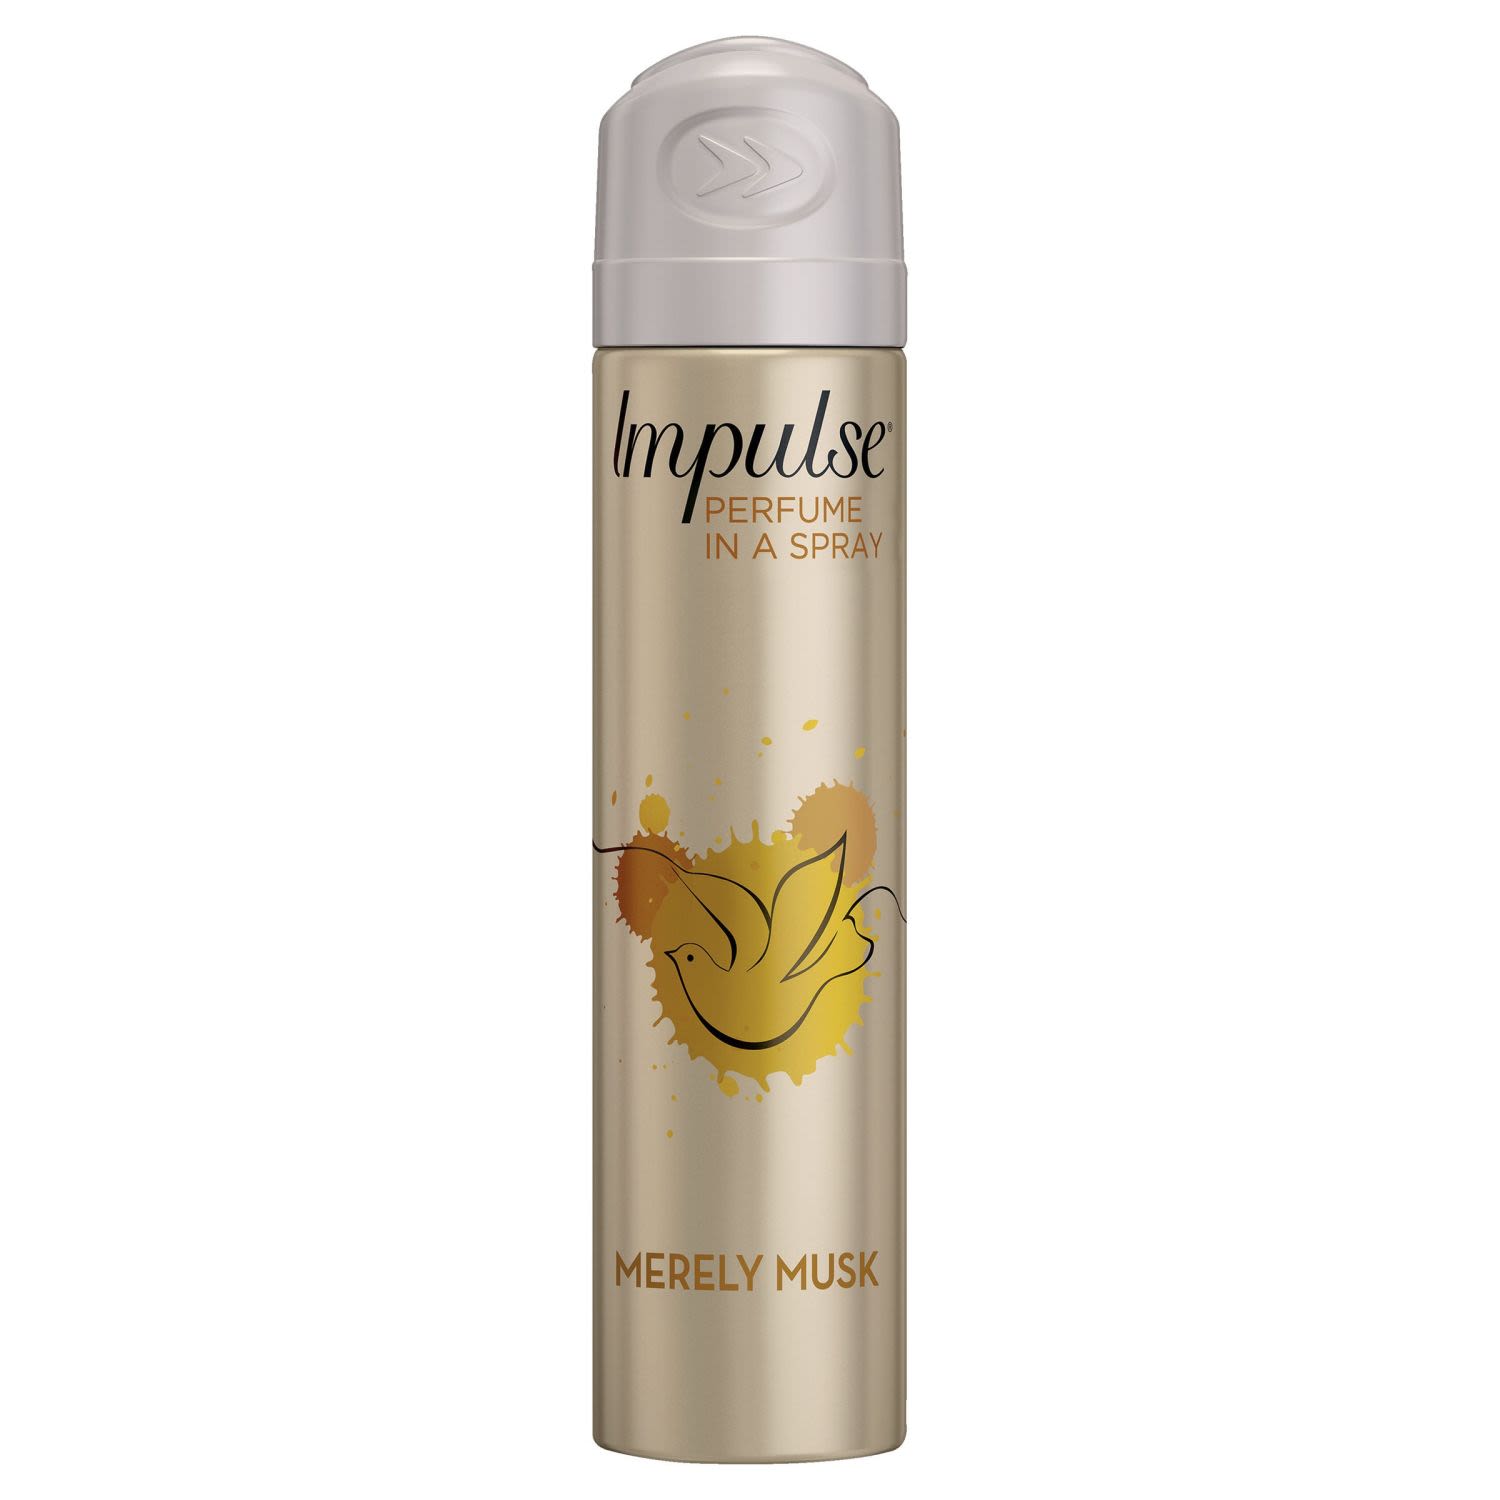 Impulse Women Body Spray Aerosol Deodorant Merely Musk, 75 Millilitre